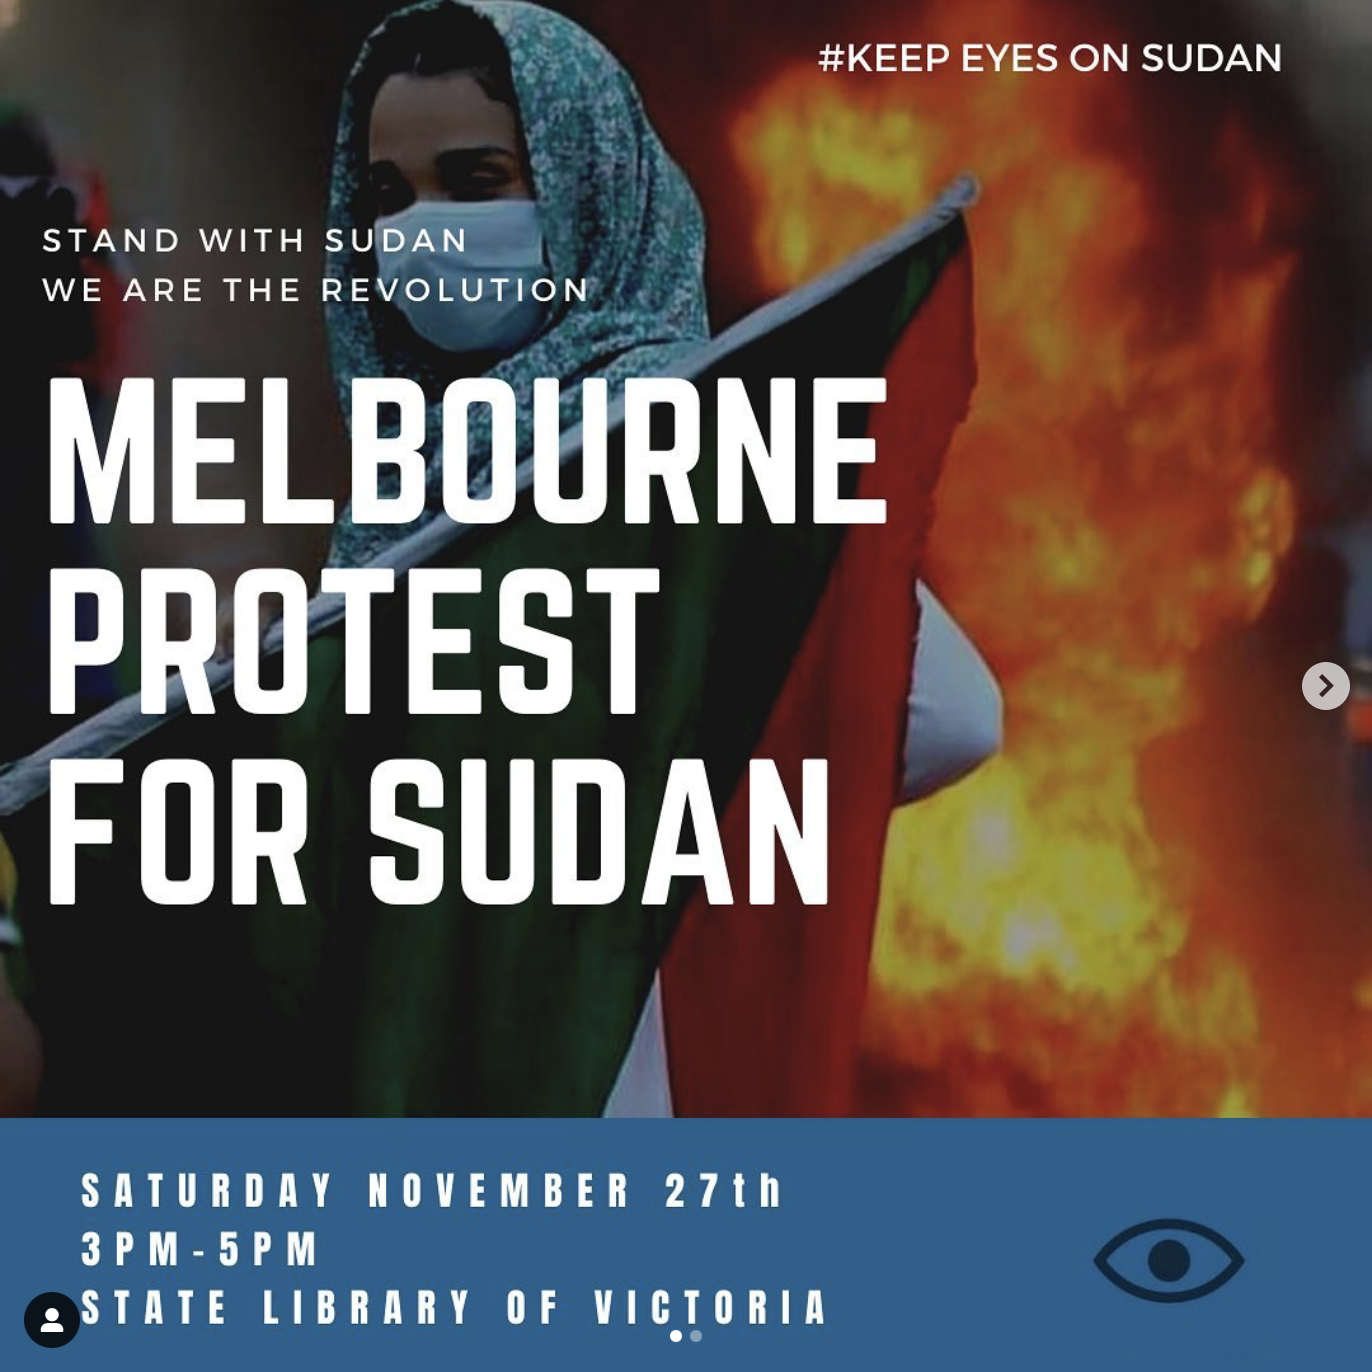 Melbourne Protest for Sudan poster